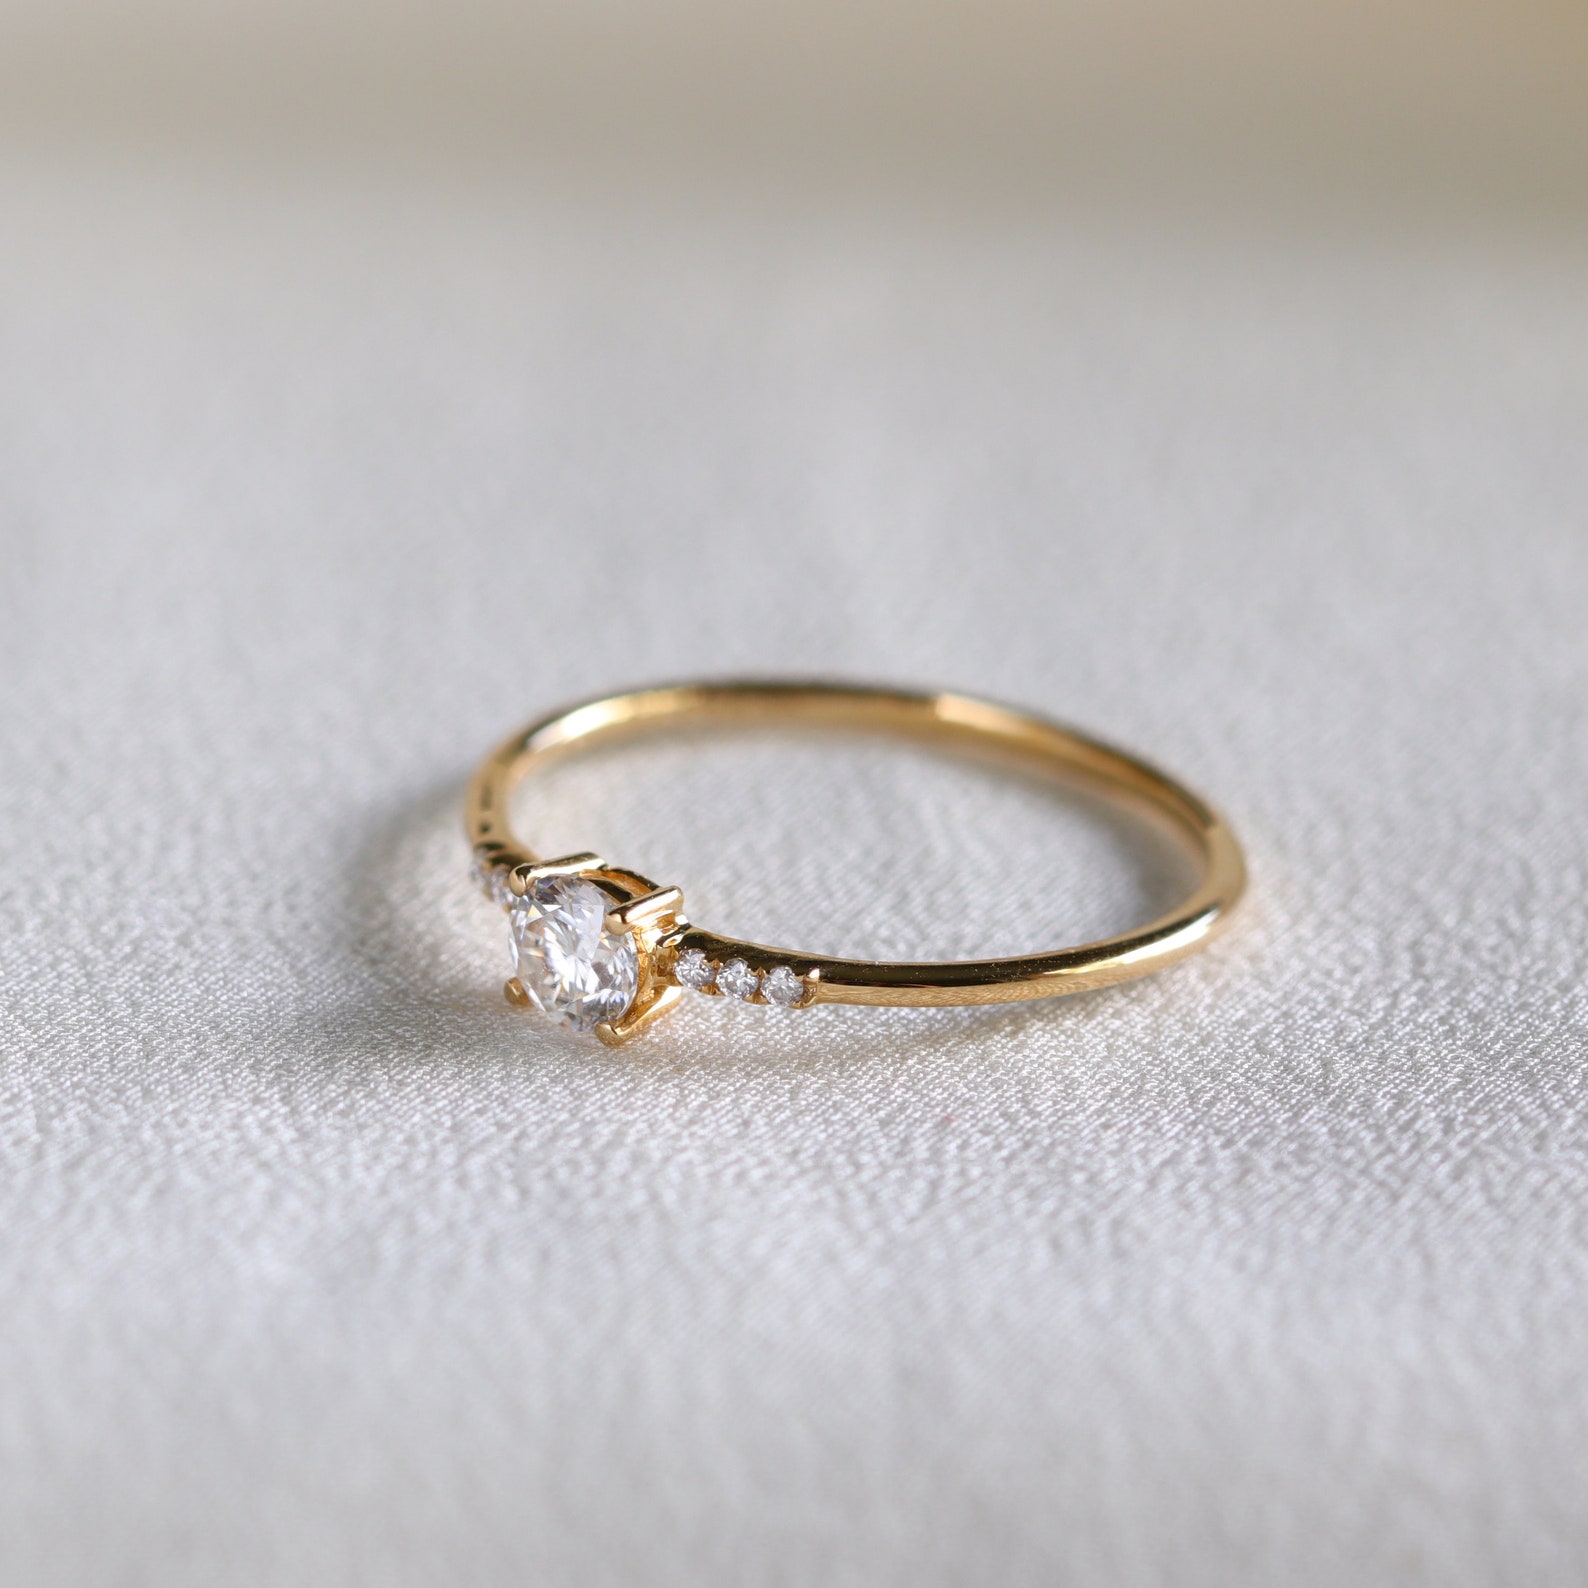 Round Cut Moissanite Diamond Engagement Ring in 10K Gold - Etsy